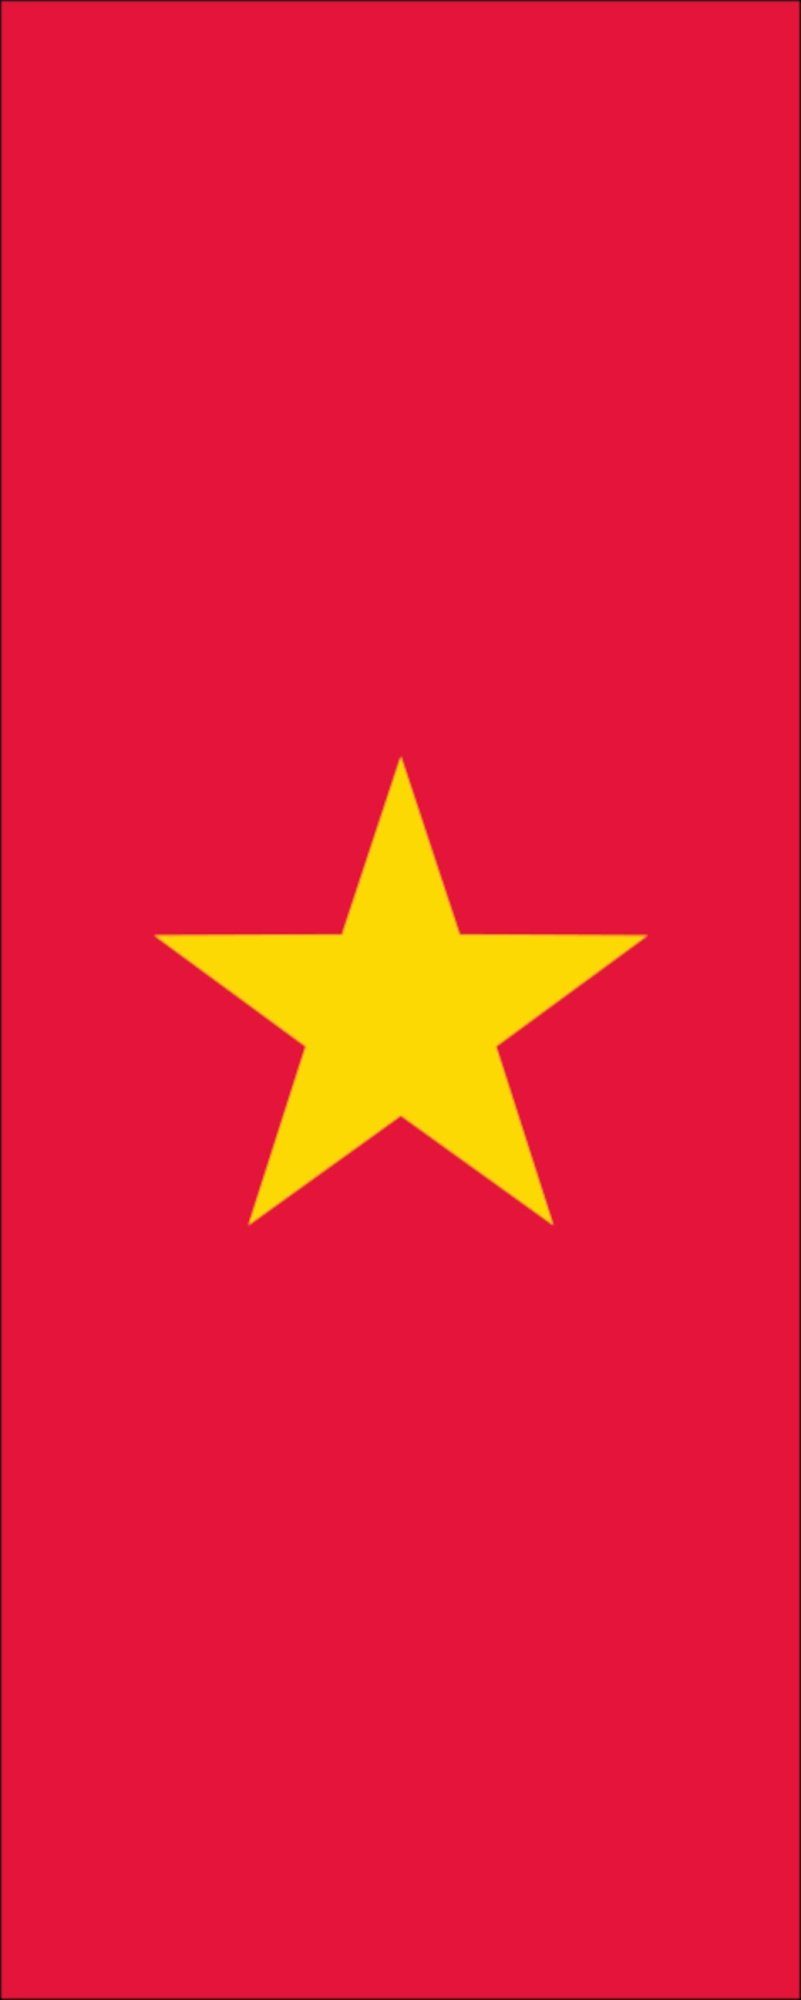 flaggenmeer Flagge Flagge Vietnam 110 g/m² Hochformat